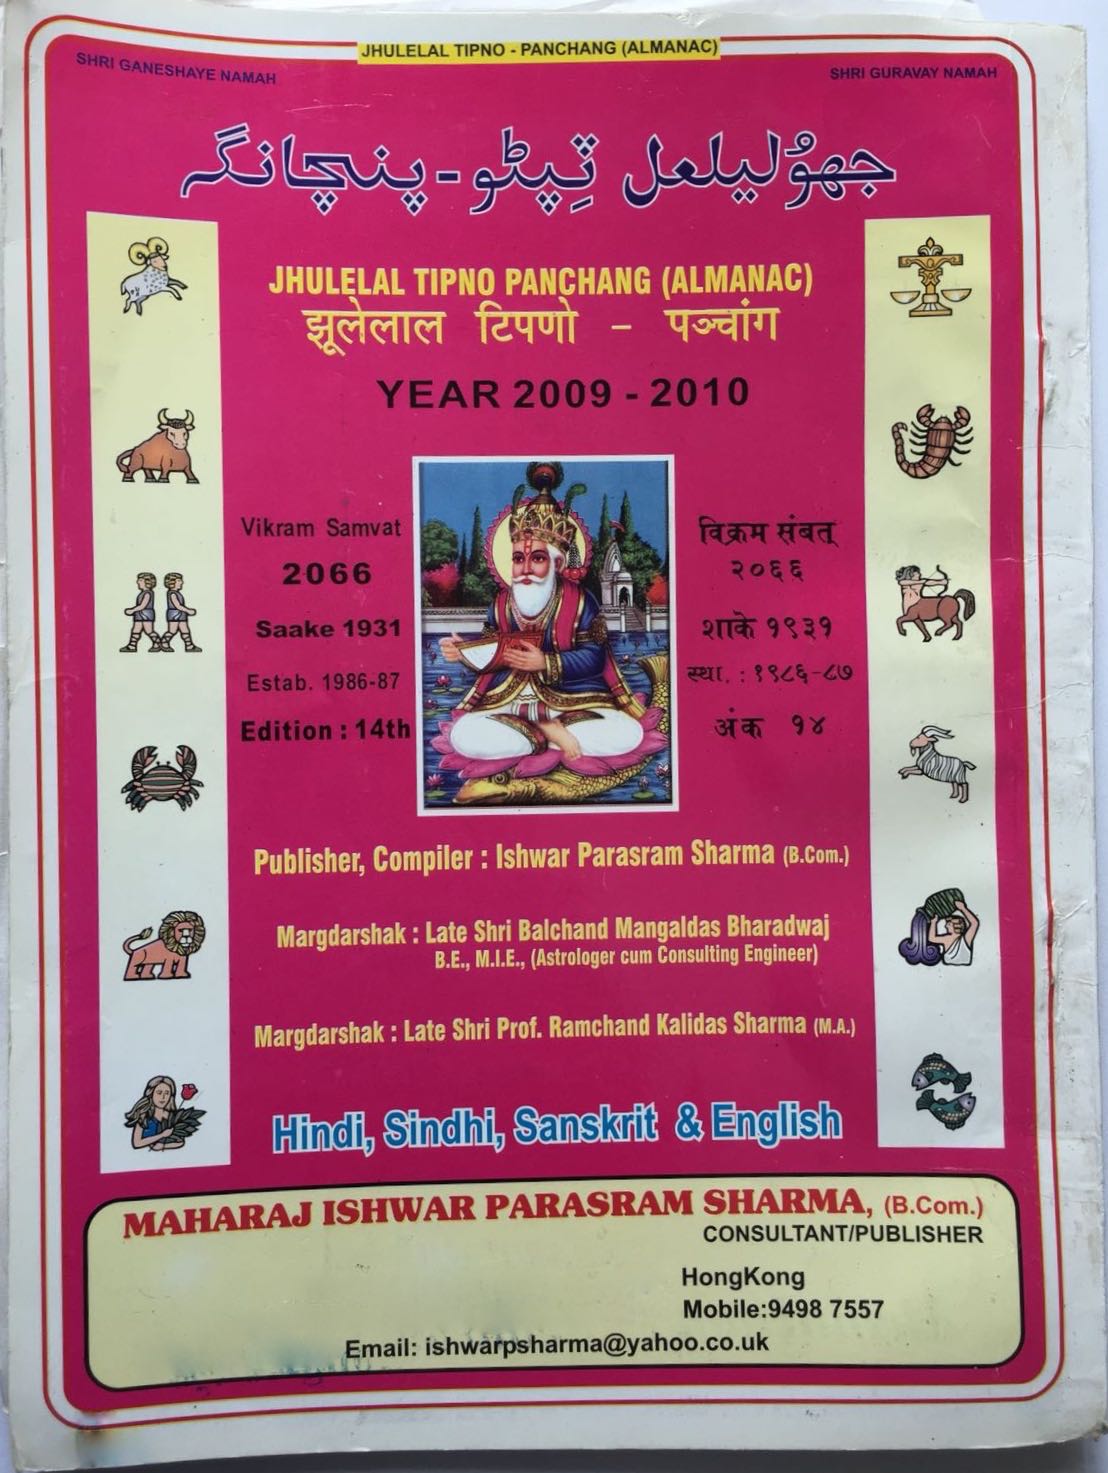 Jhulelal Tipno Panchang (Almanac) Year 2009-2010 compiled by Ishwar Parsram Sharma in Hindi, Sindhi, Sanskrit and English -Top cover page Sindhi side